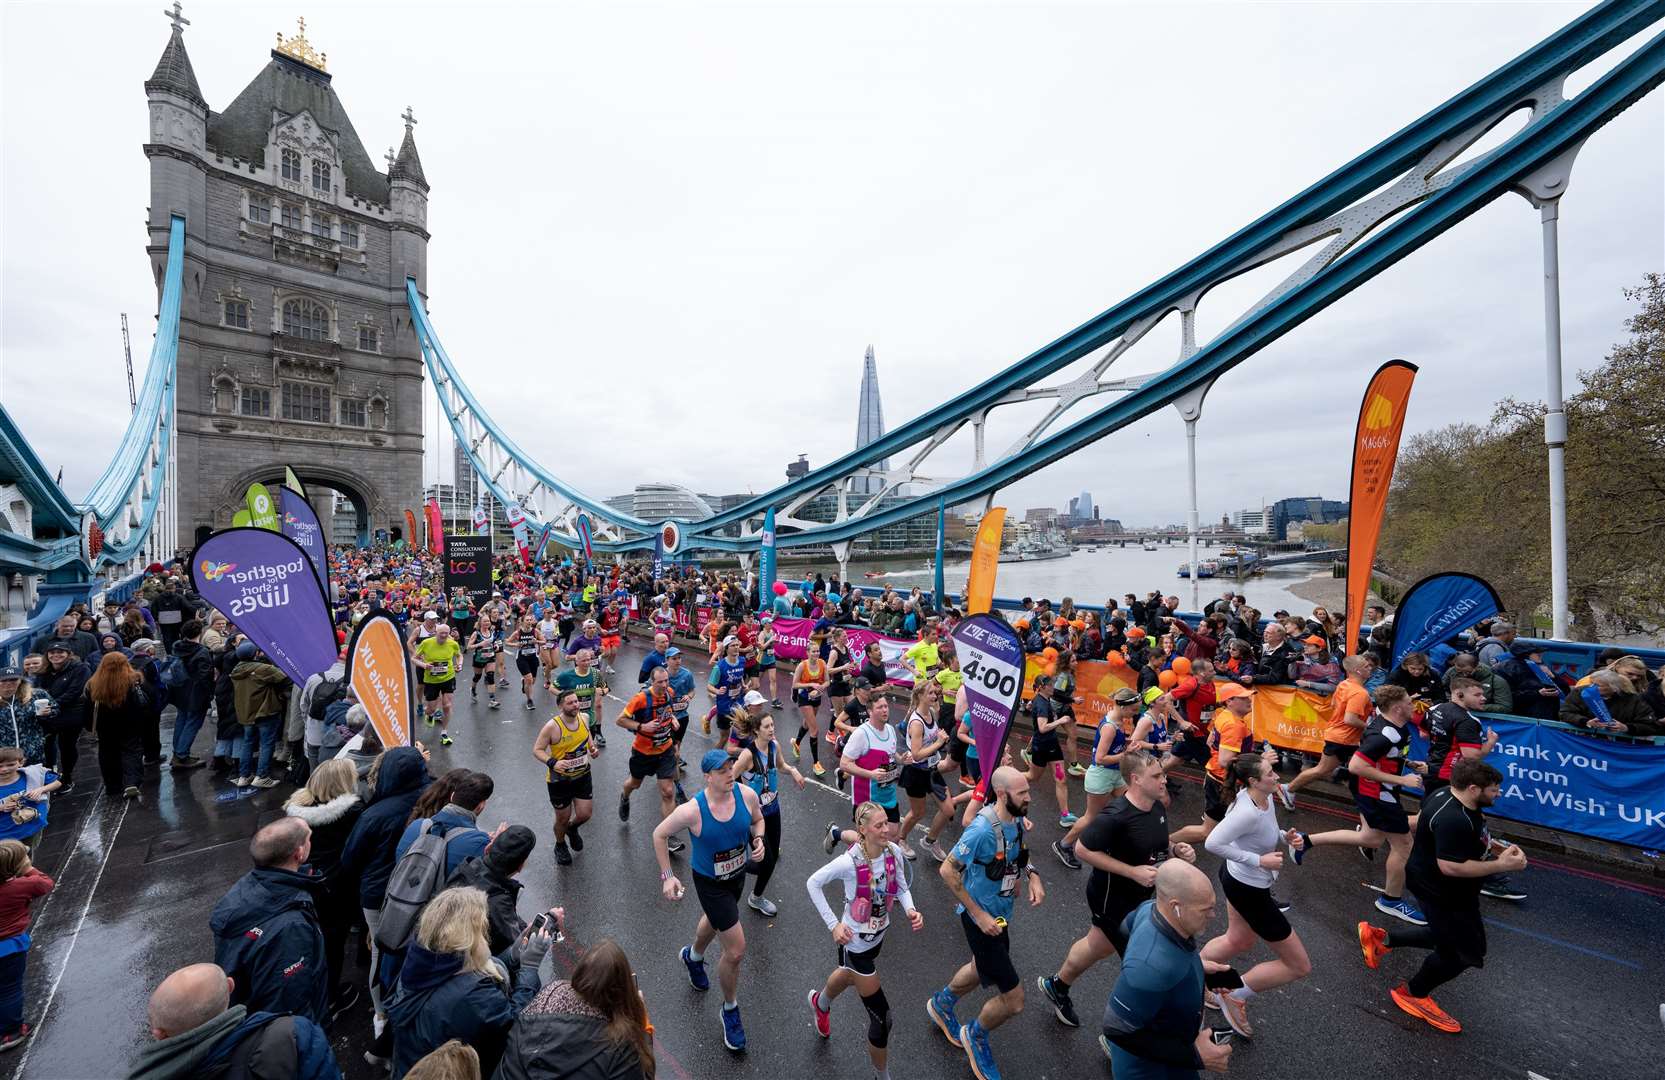 The TCS London Marathon is the most popular marathon in the world say organisers. Image credit: TCS London Marathon.